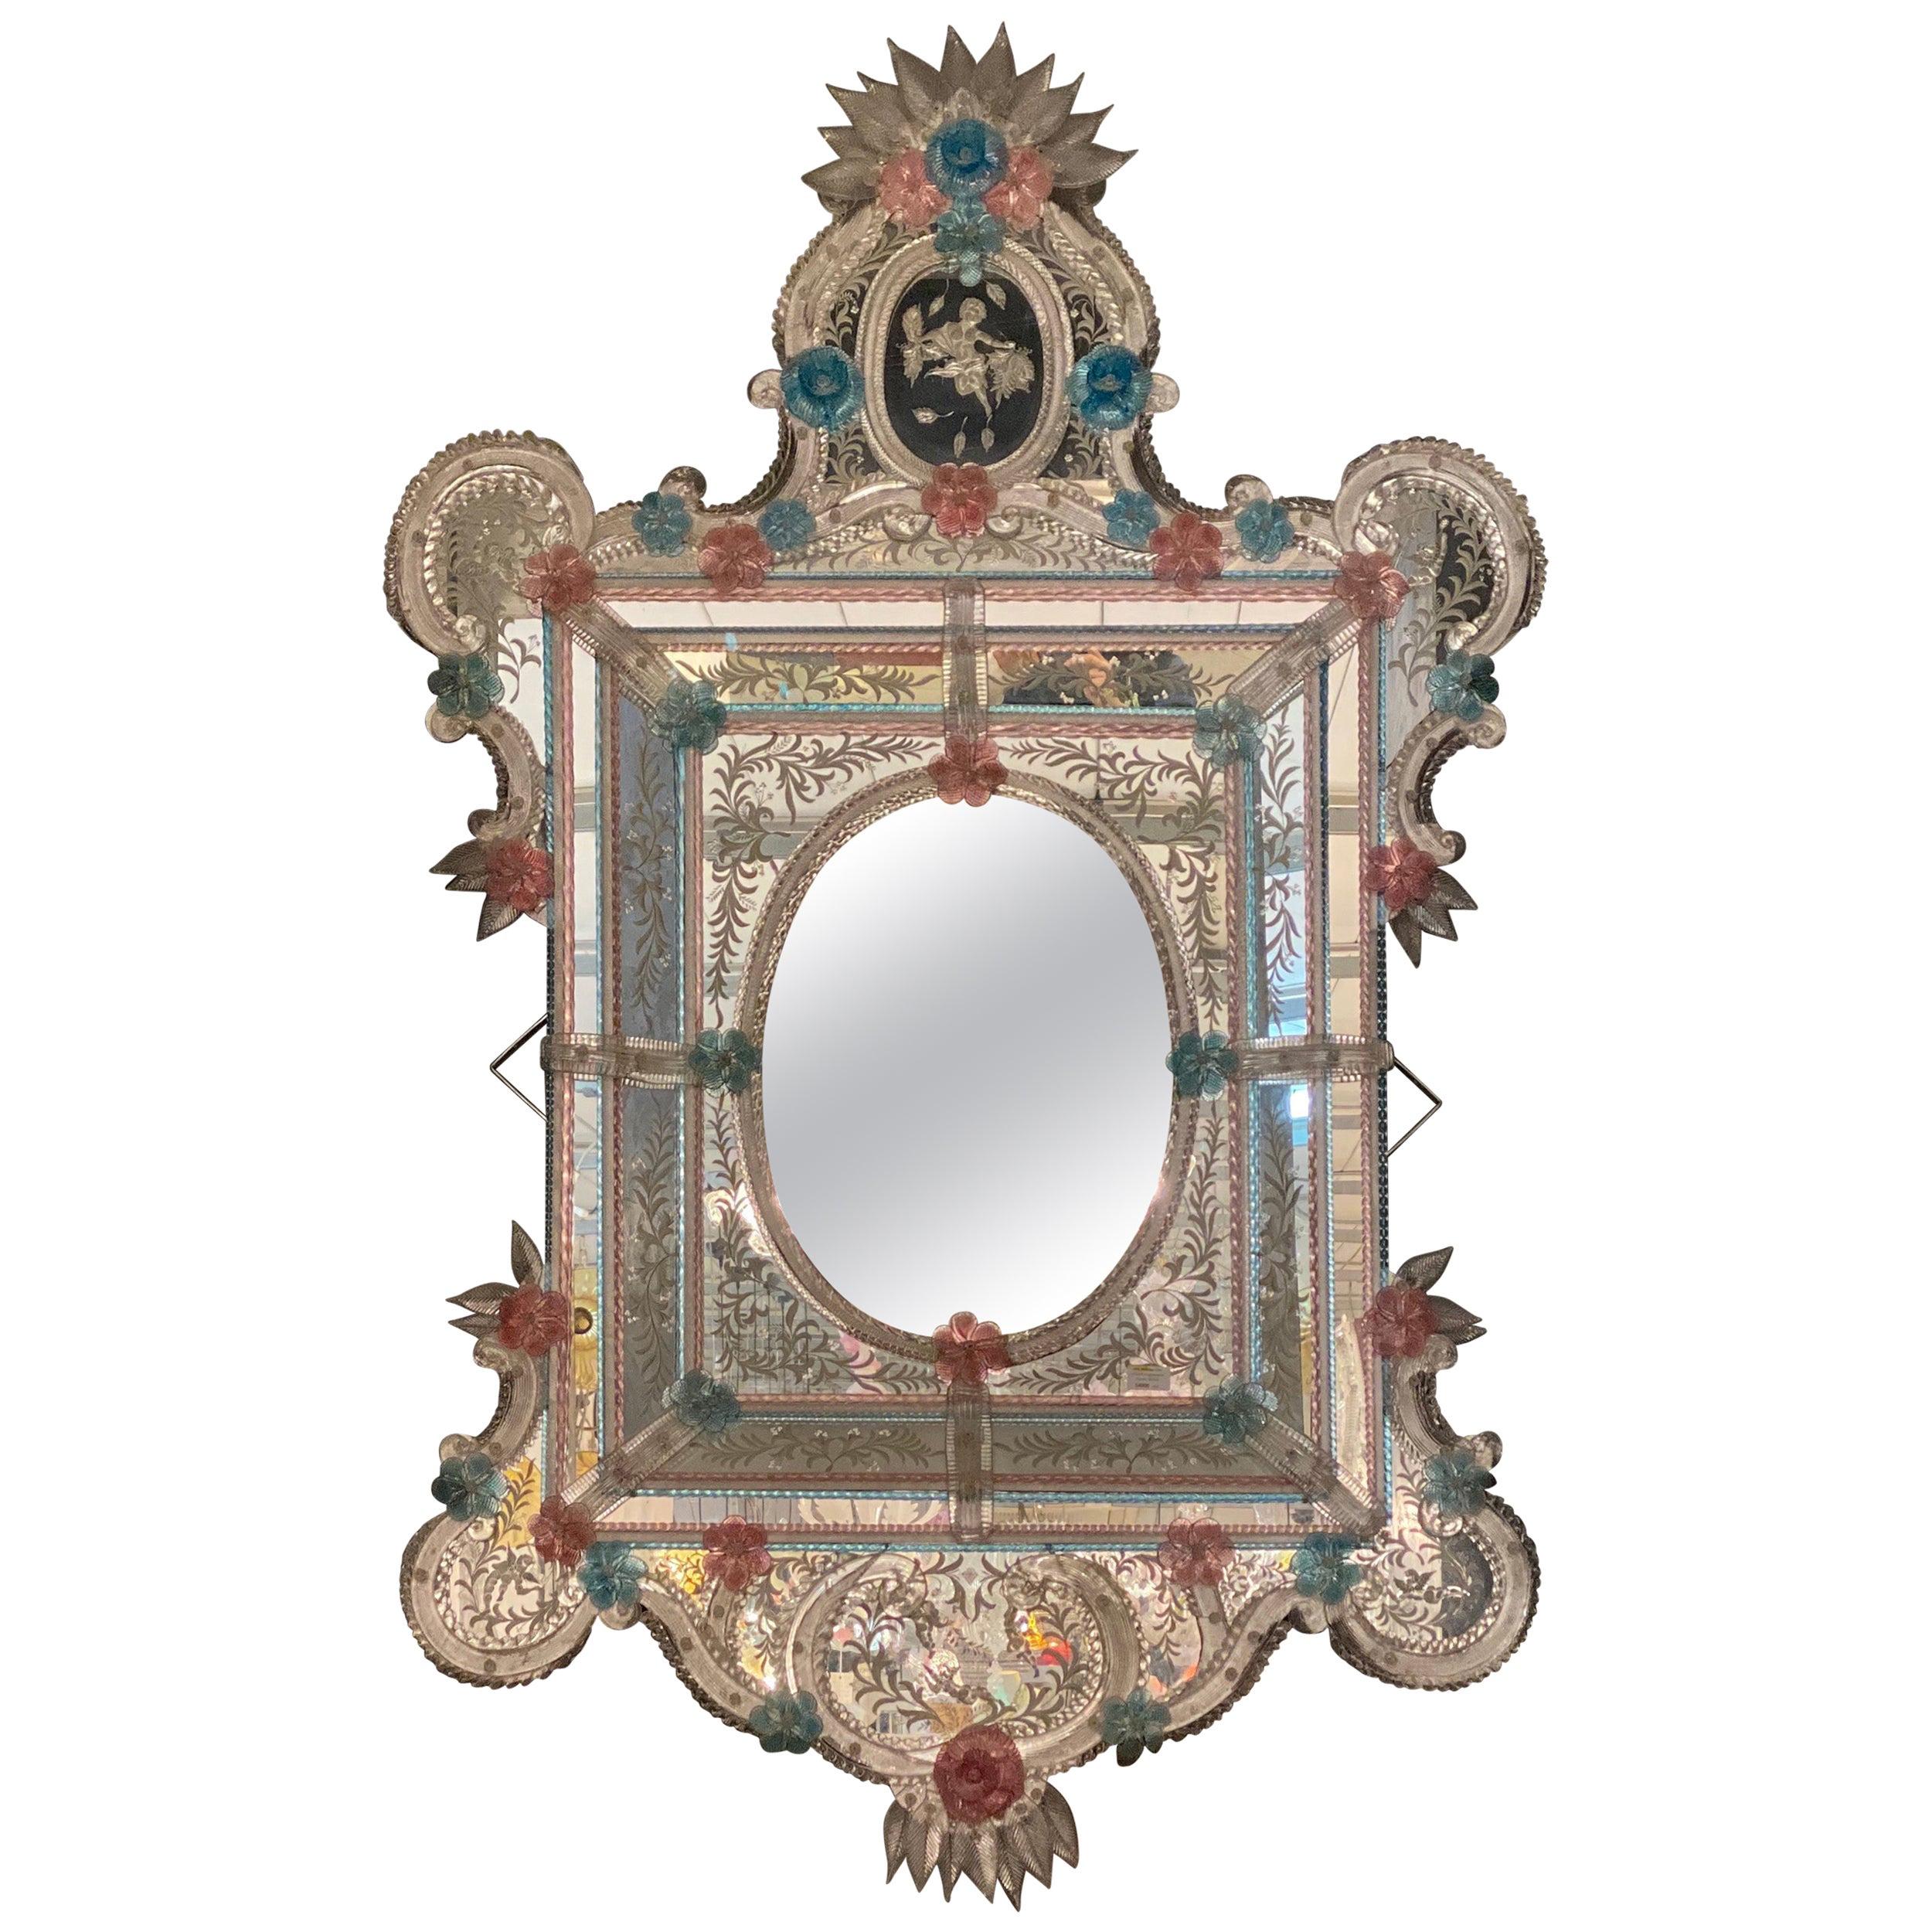 Prächtiger venezianischer Murano-Glas-Spiegel